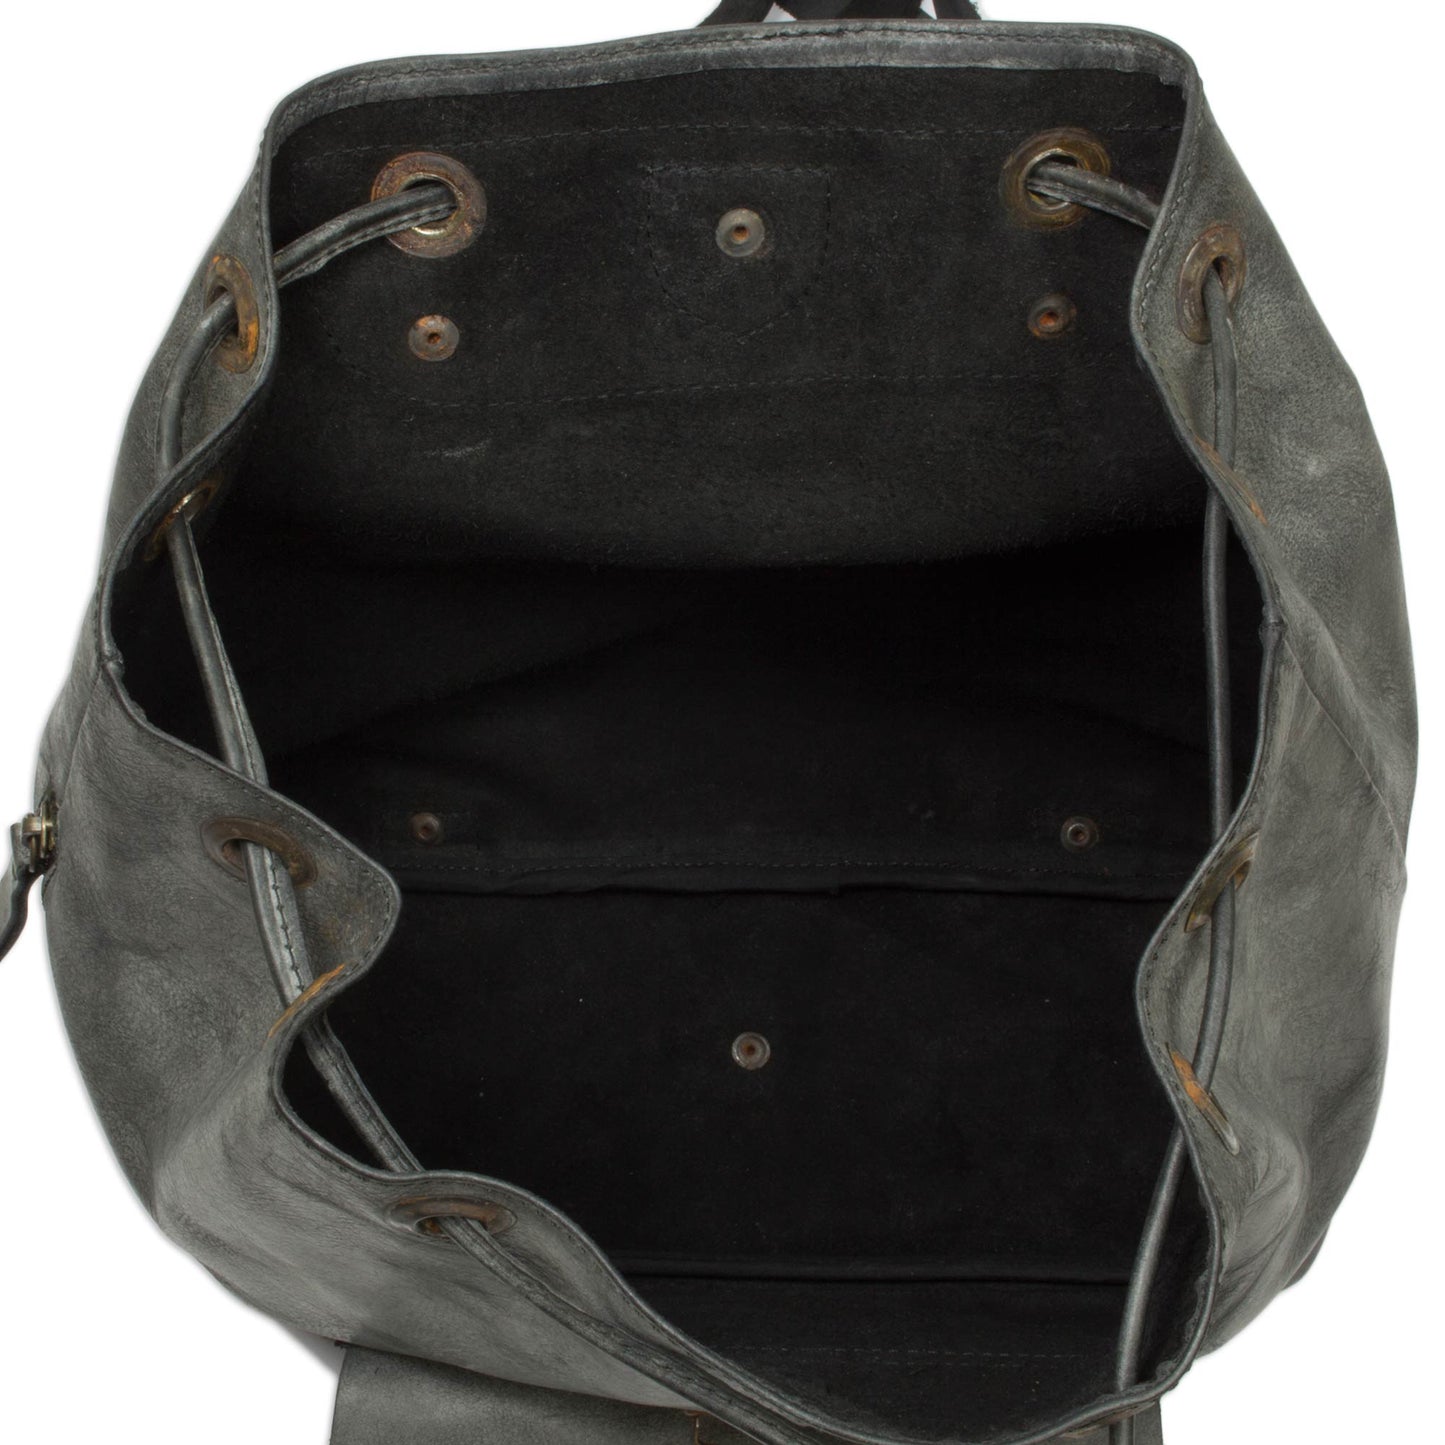 Weathered Charcoal Weathered Charcoal Leather Handcrafted Men's Backpack